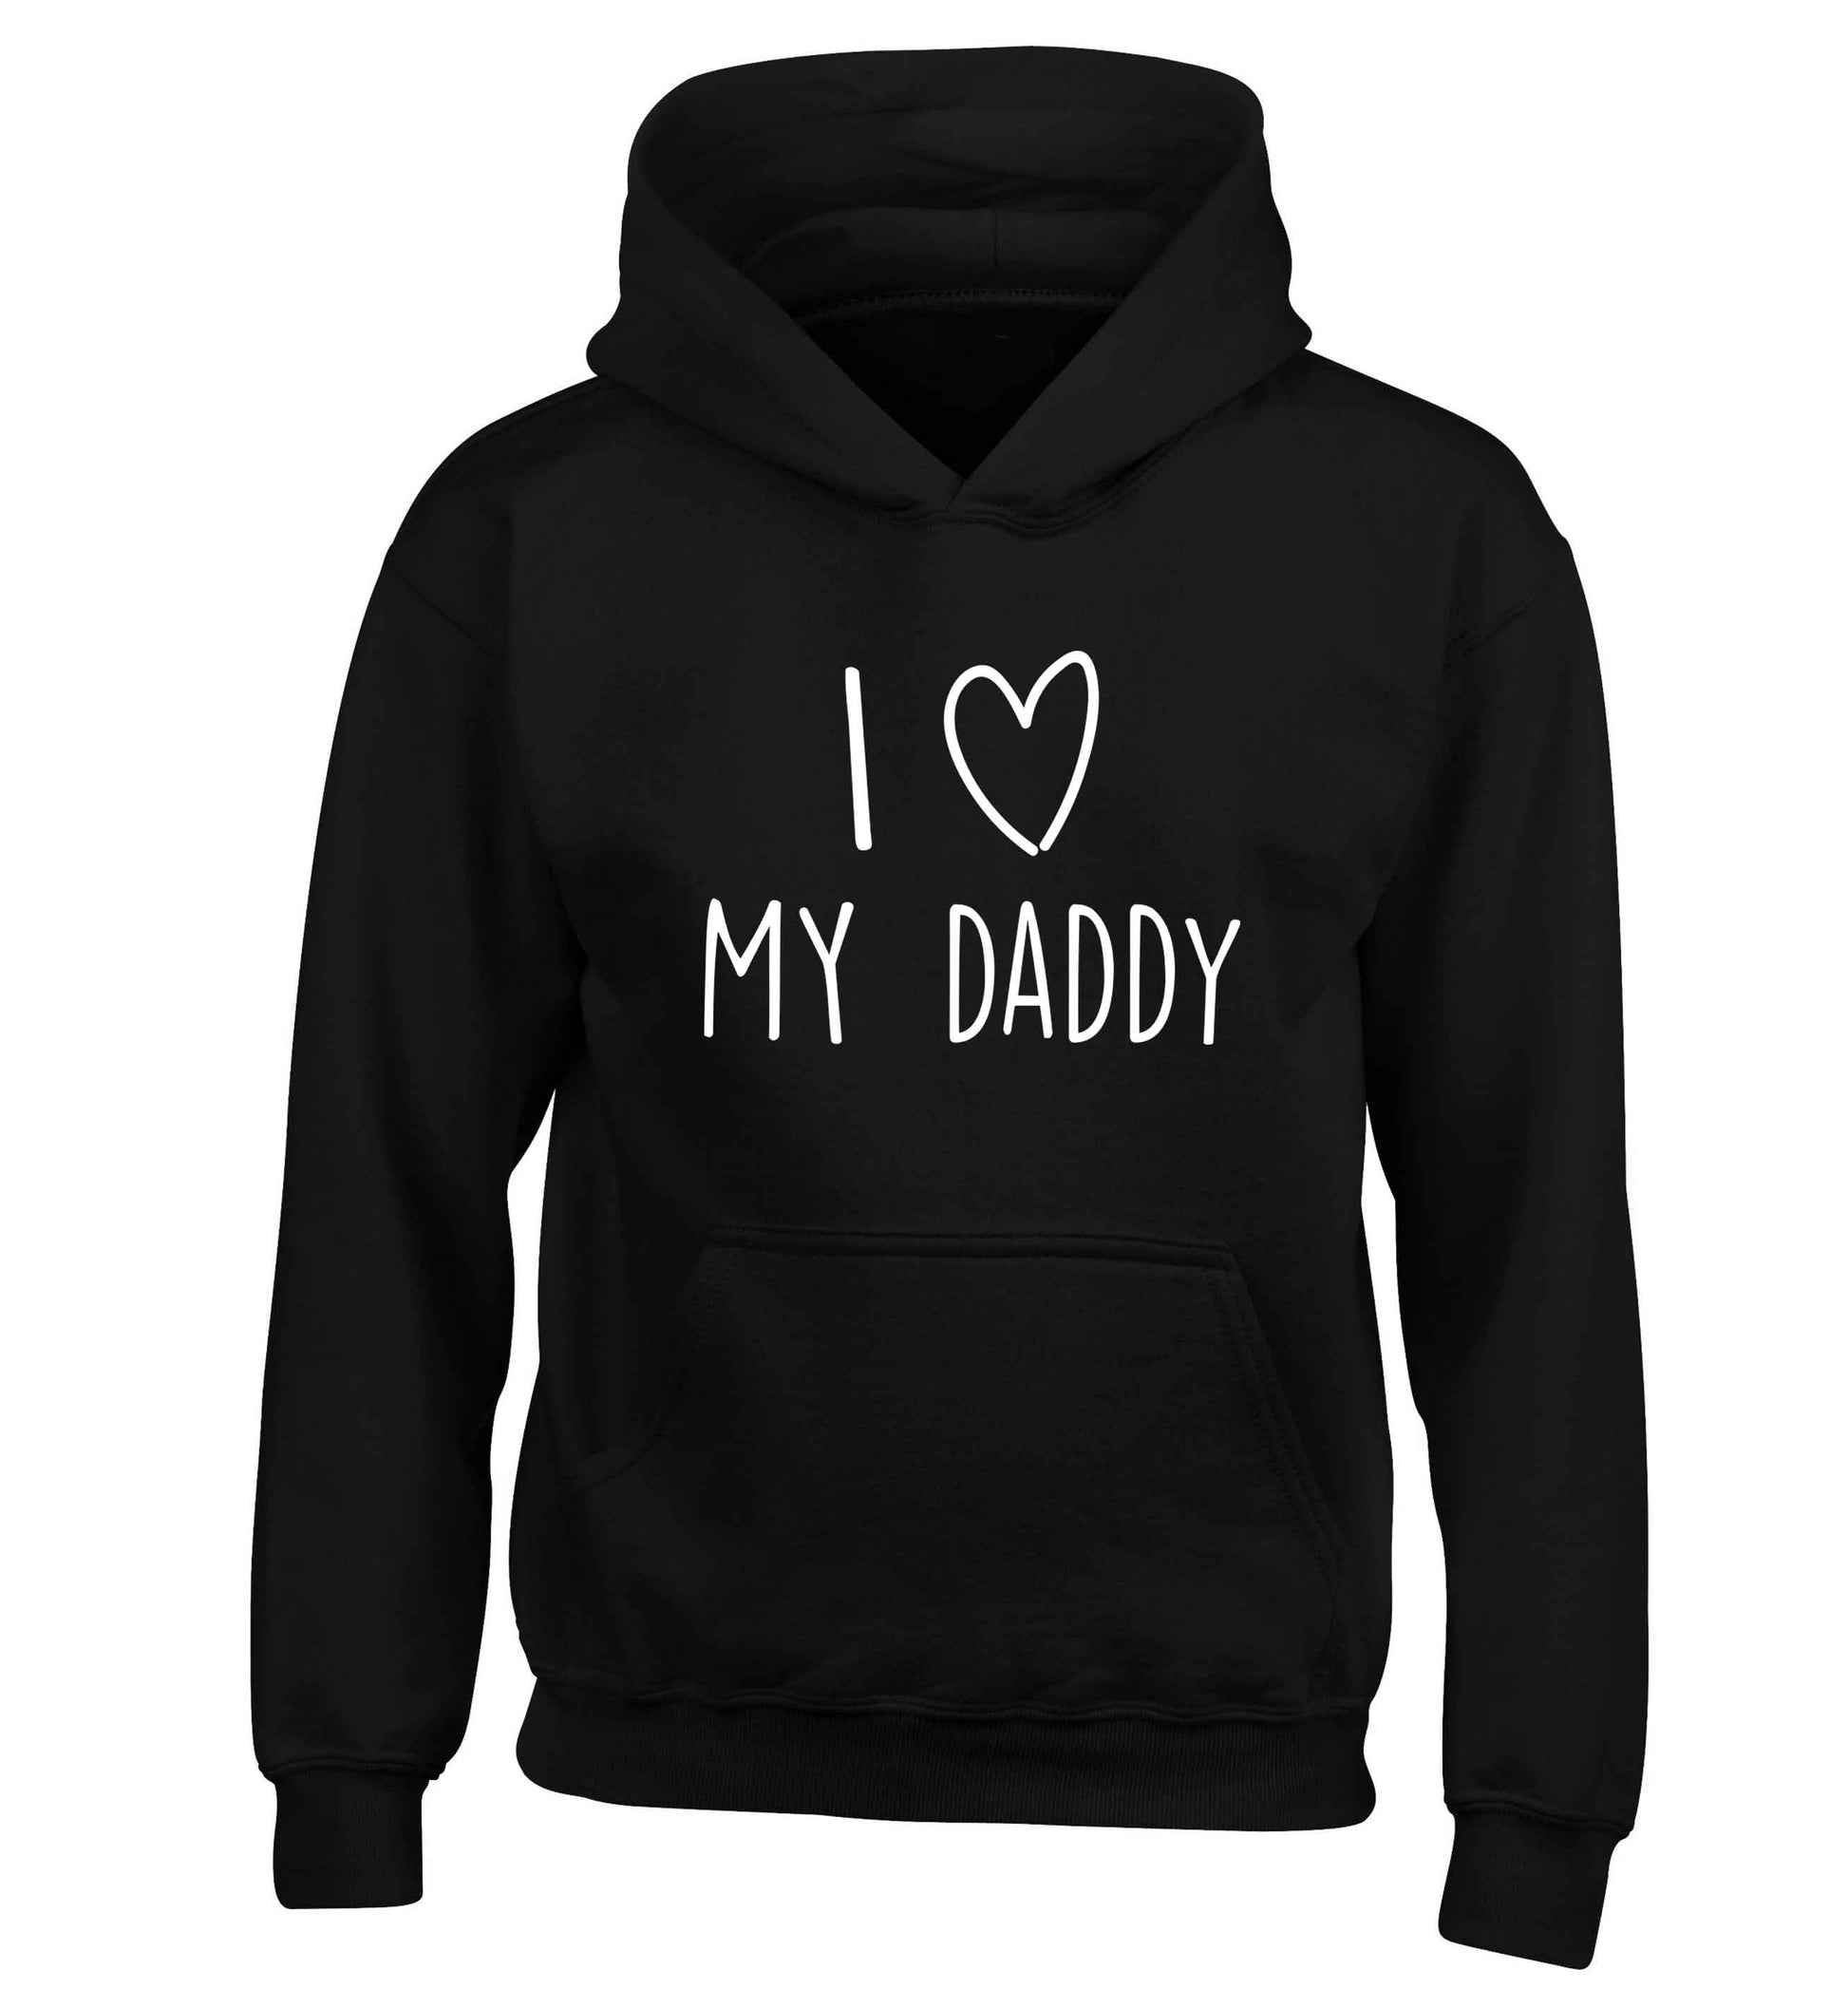 I love my daddy children's black hoodie 12-13 Years